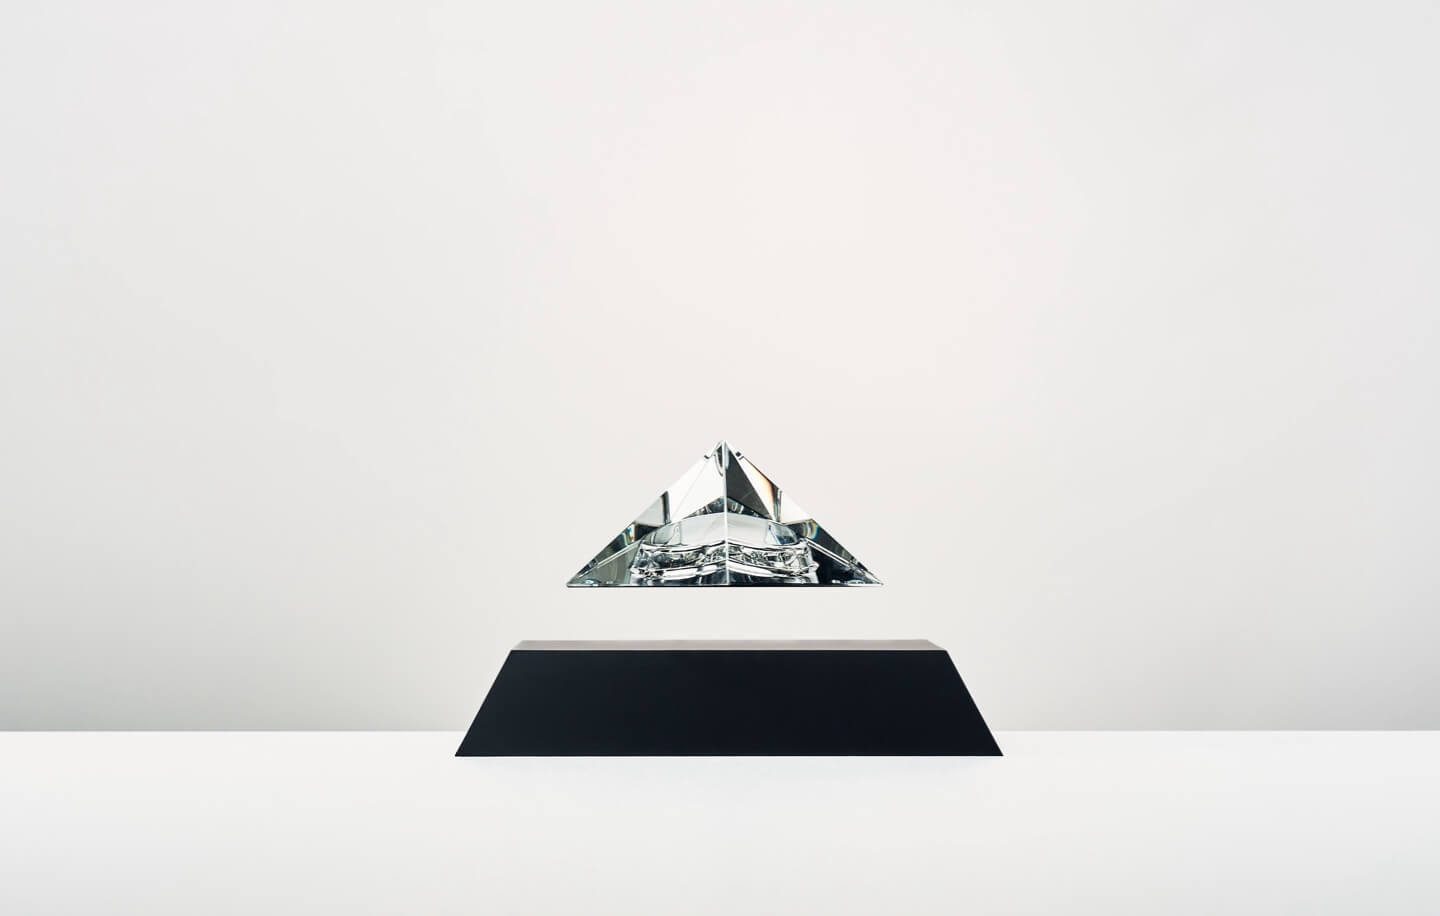 Py levitating crystal pyramid, black cover base, clear crystal top